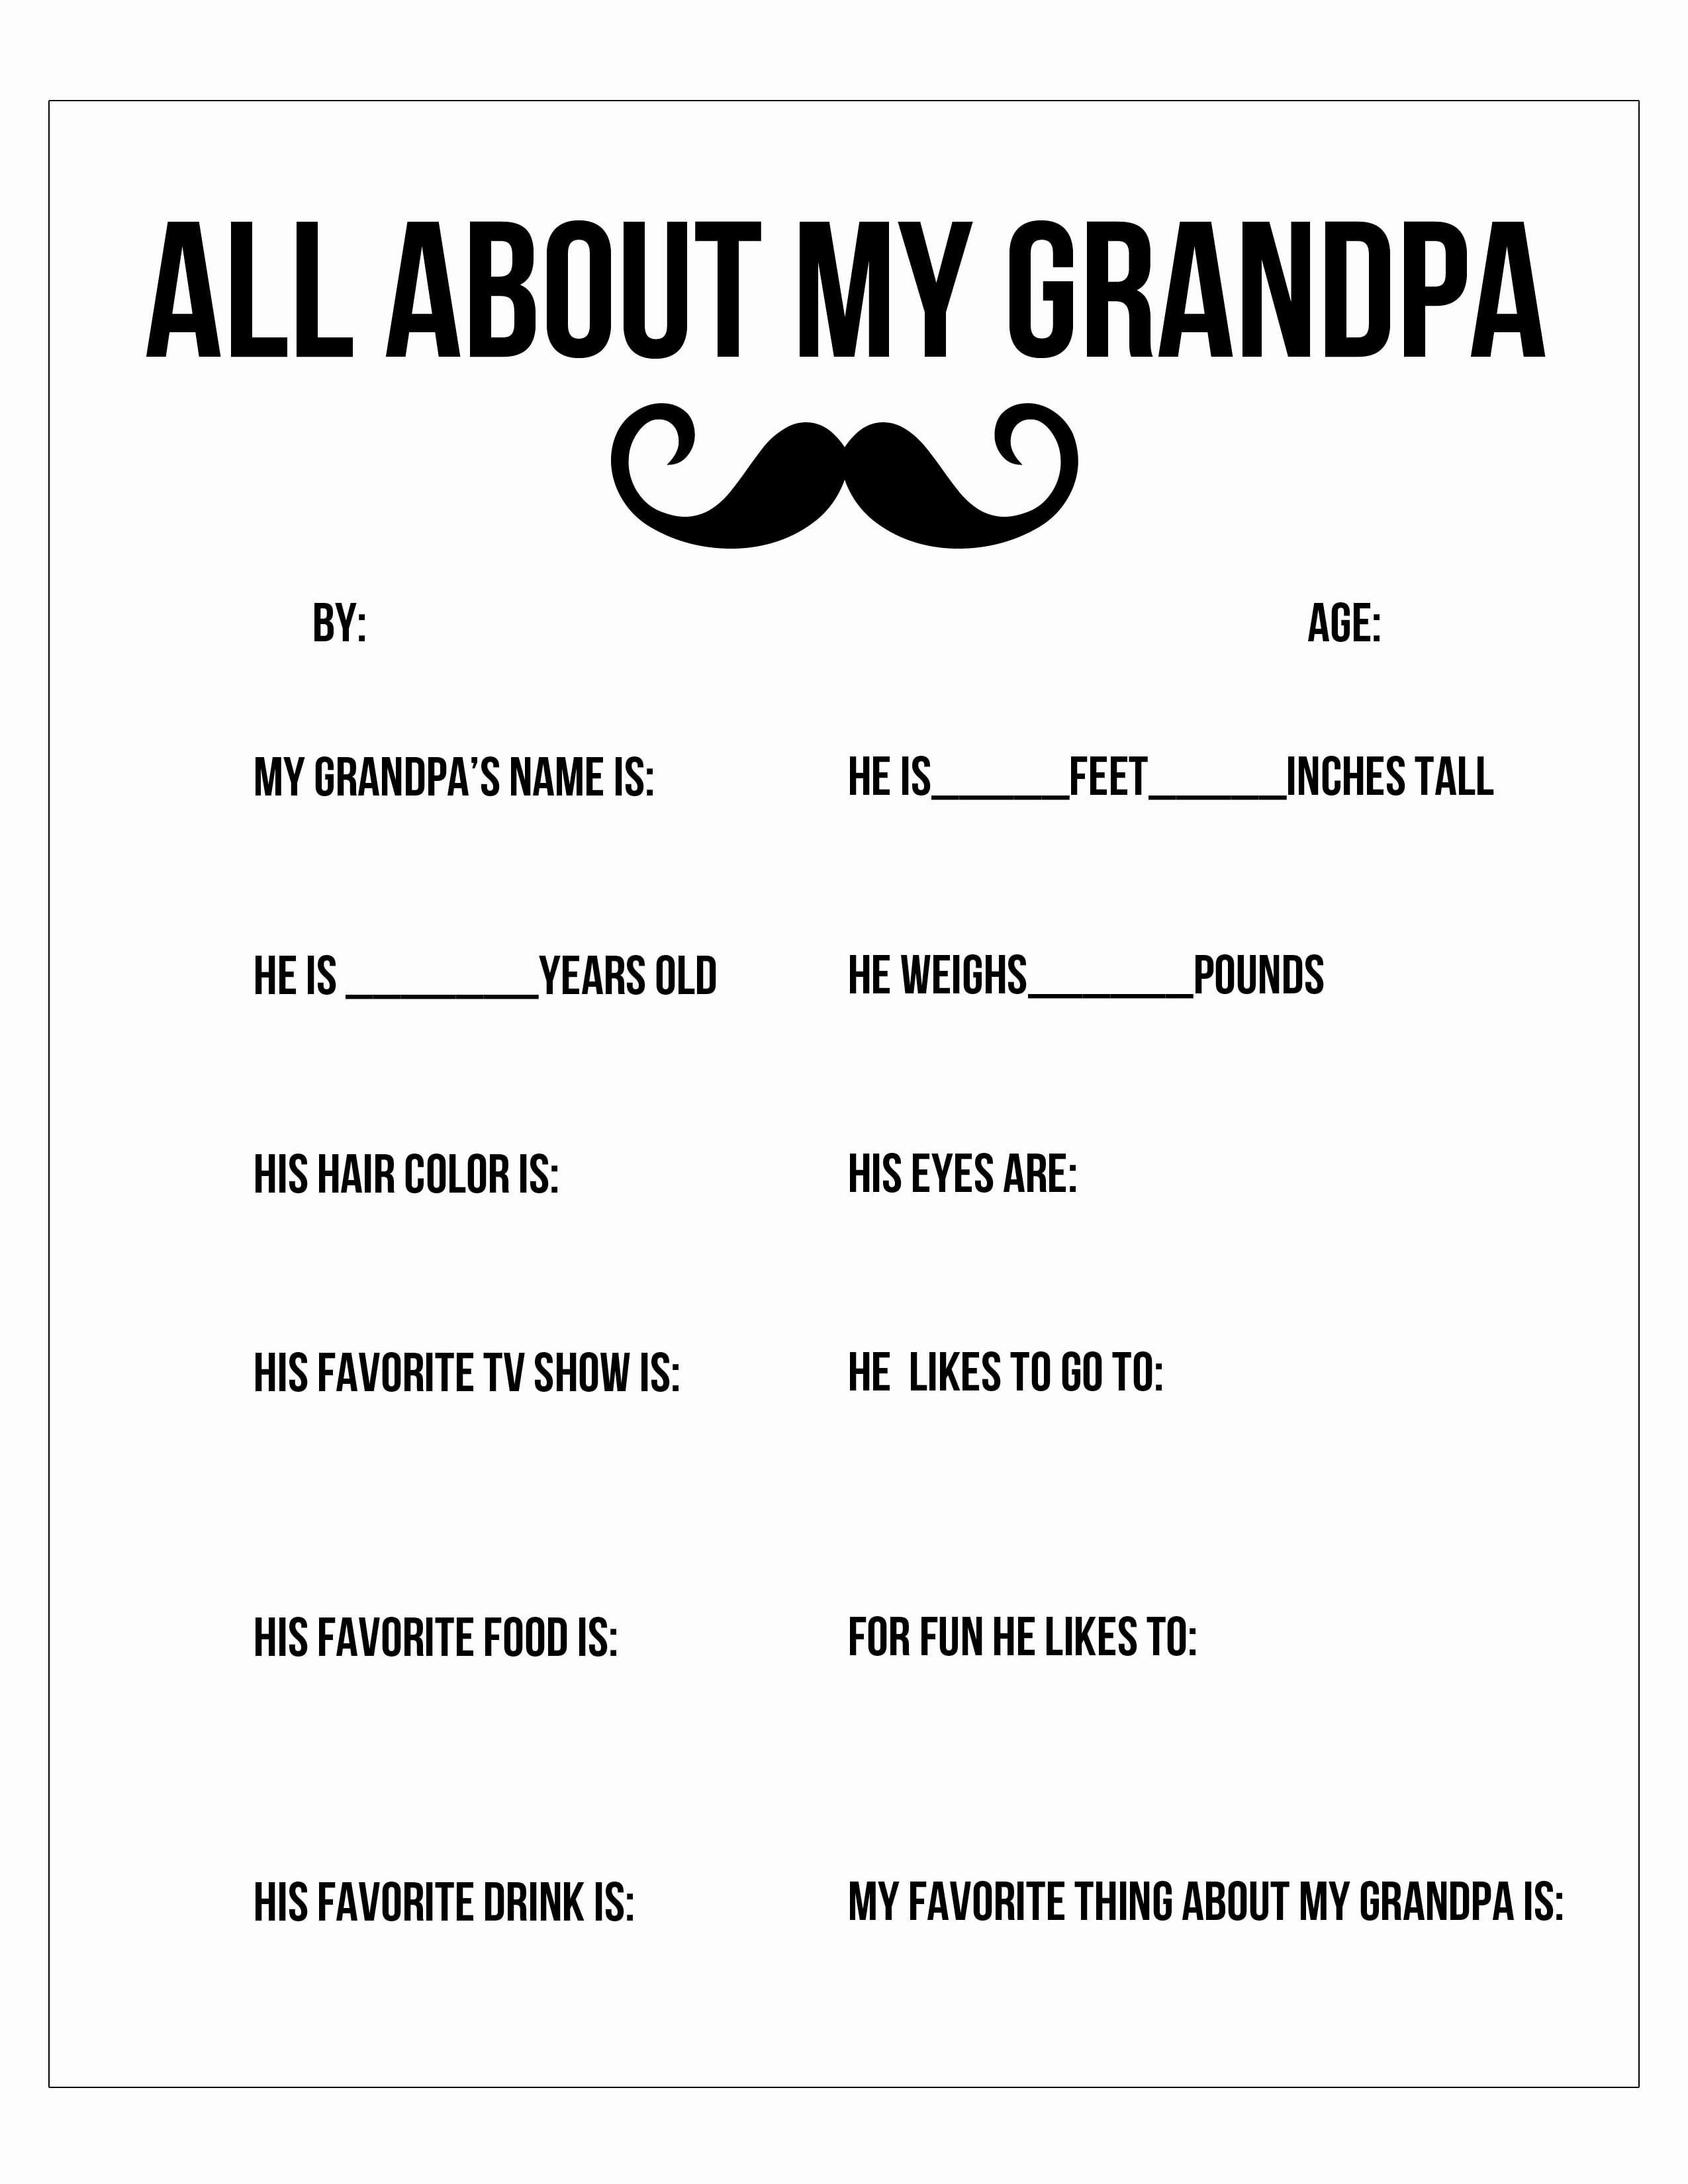 Birthday Card Ideas For Grandpa Grandpa Birthday Card Ideas Funny Printable Coloring To Make Wording